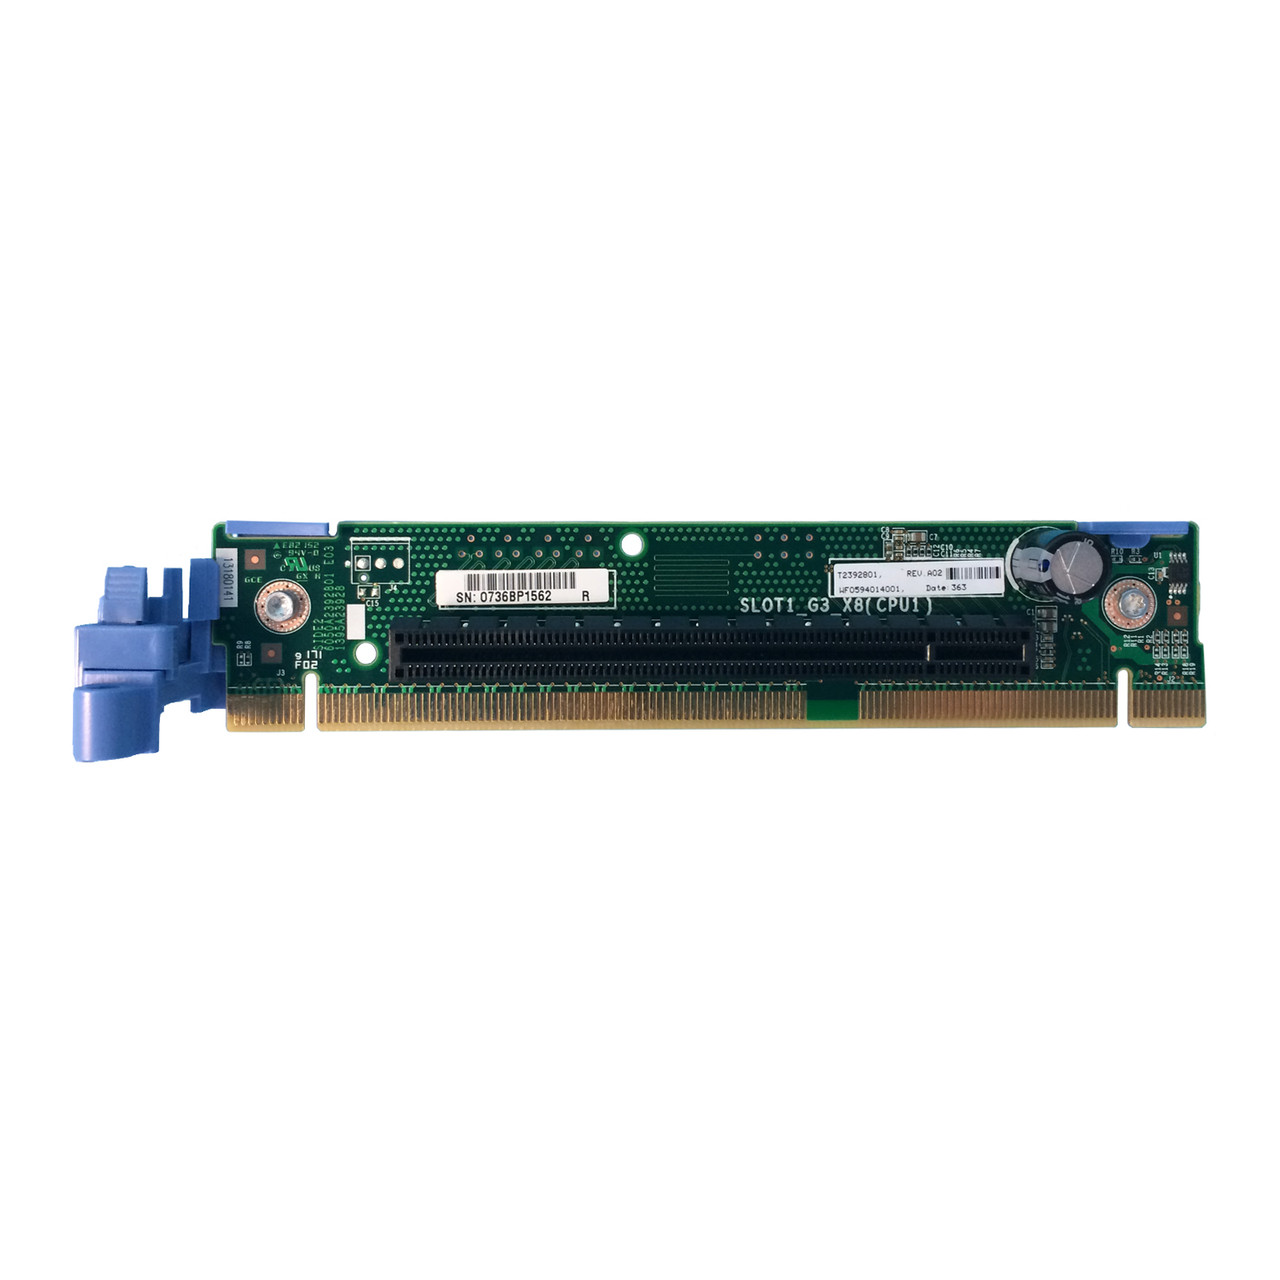 Dell WHFV4 Poweredge R620 PCIe x8 Riser Board